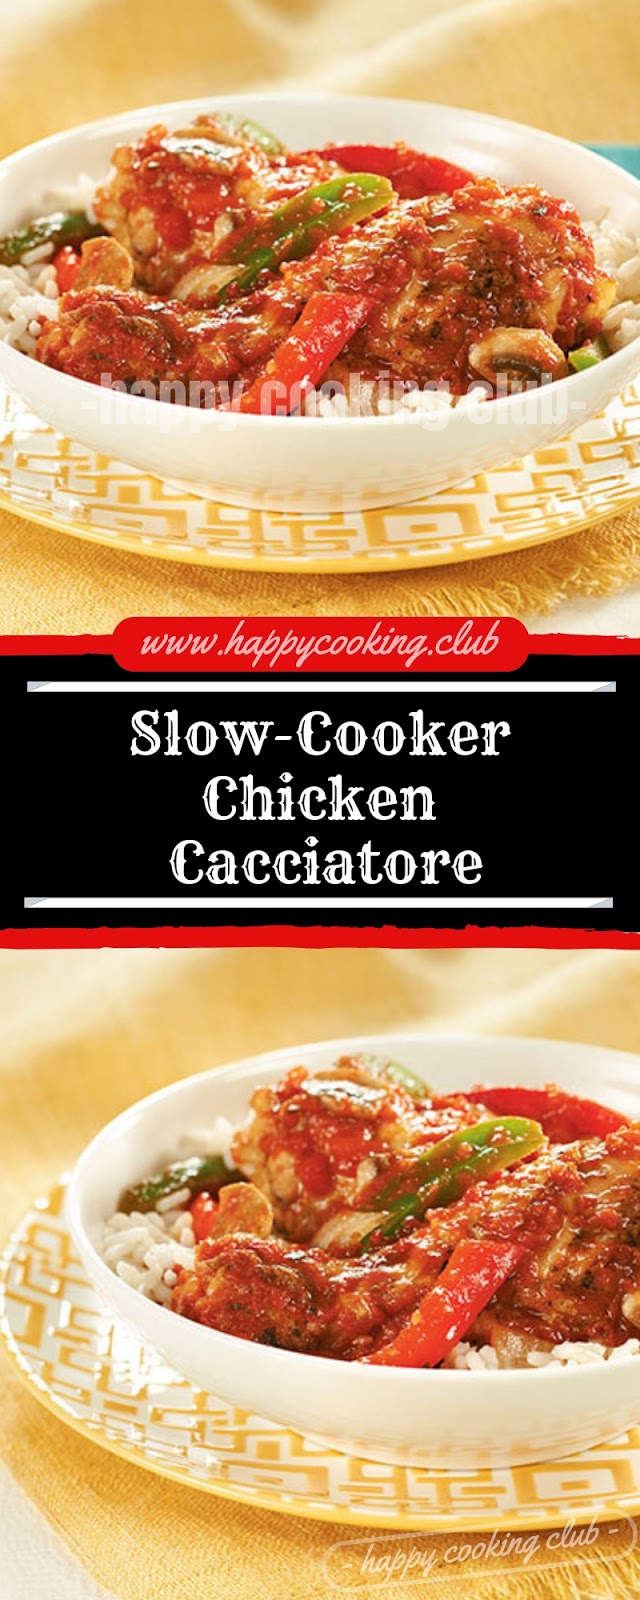 Slow-Cooker Chicken Cacciatore